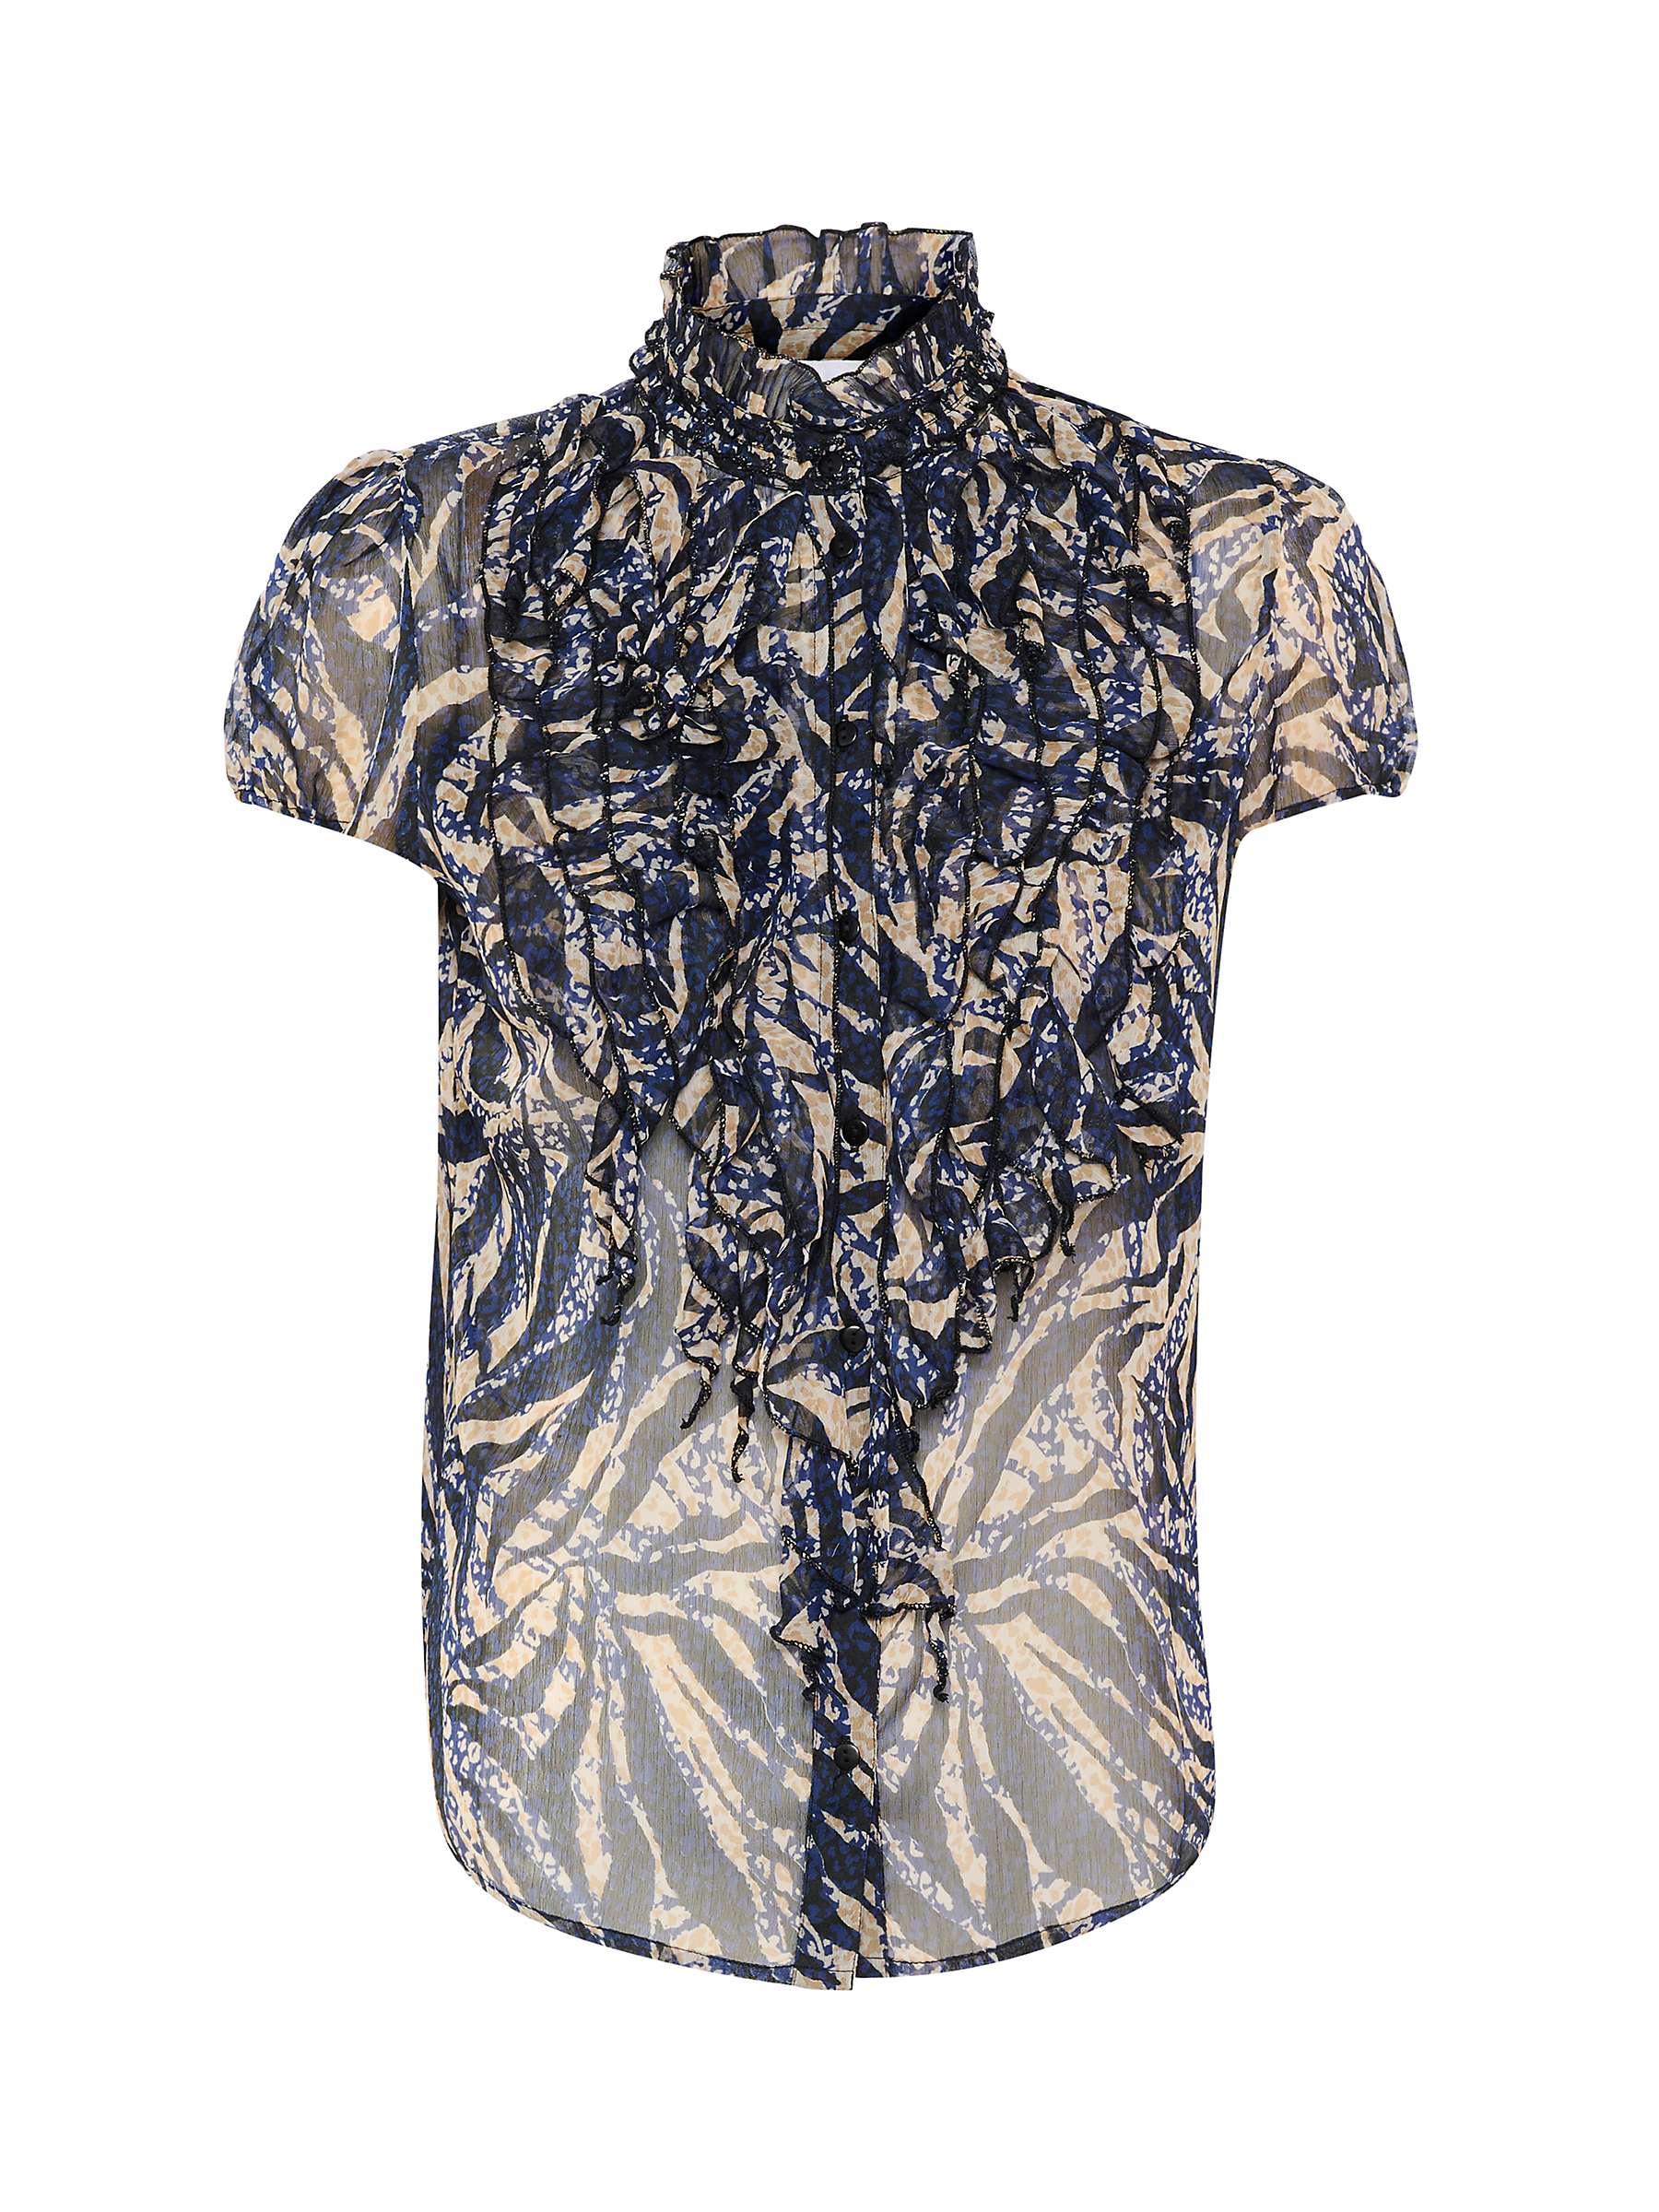 Buy Saint Tropez Lilja Short Sleeve Shirt, Black Zebra Leaves Online at johnlewis.com